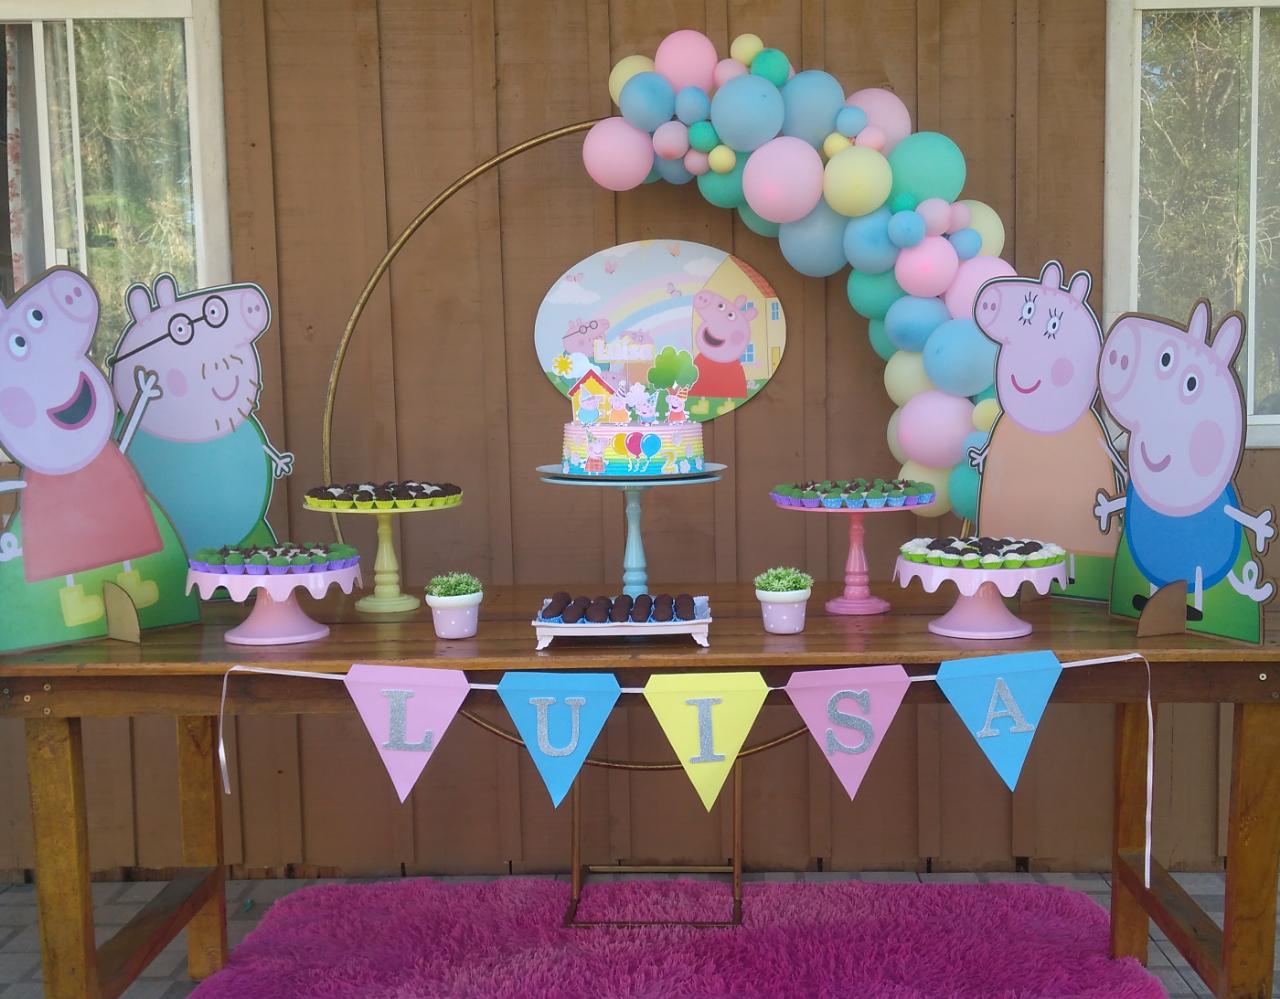 casinha peppa  Peppa pig birthday party, Peppa pig birthday party